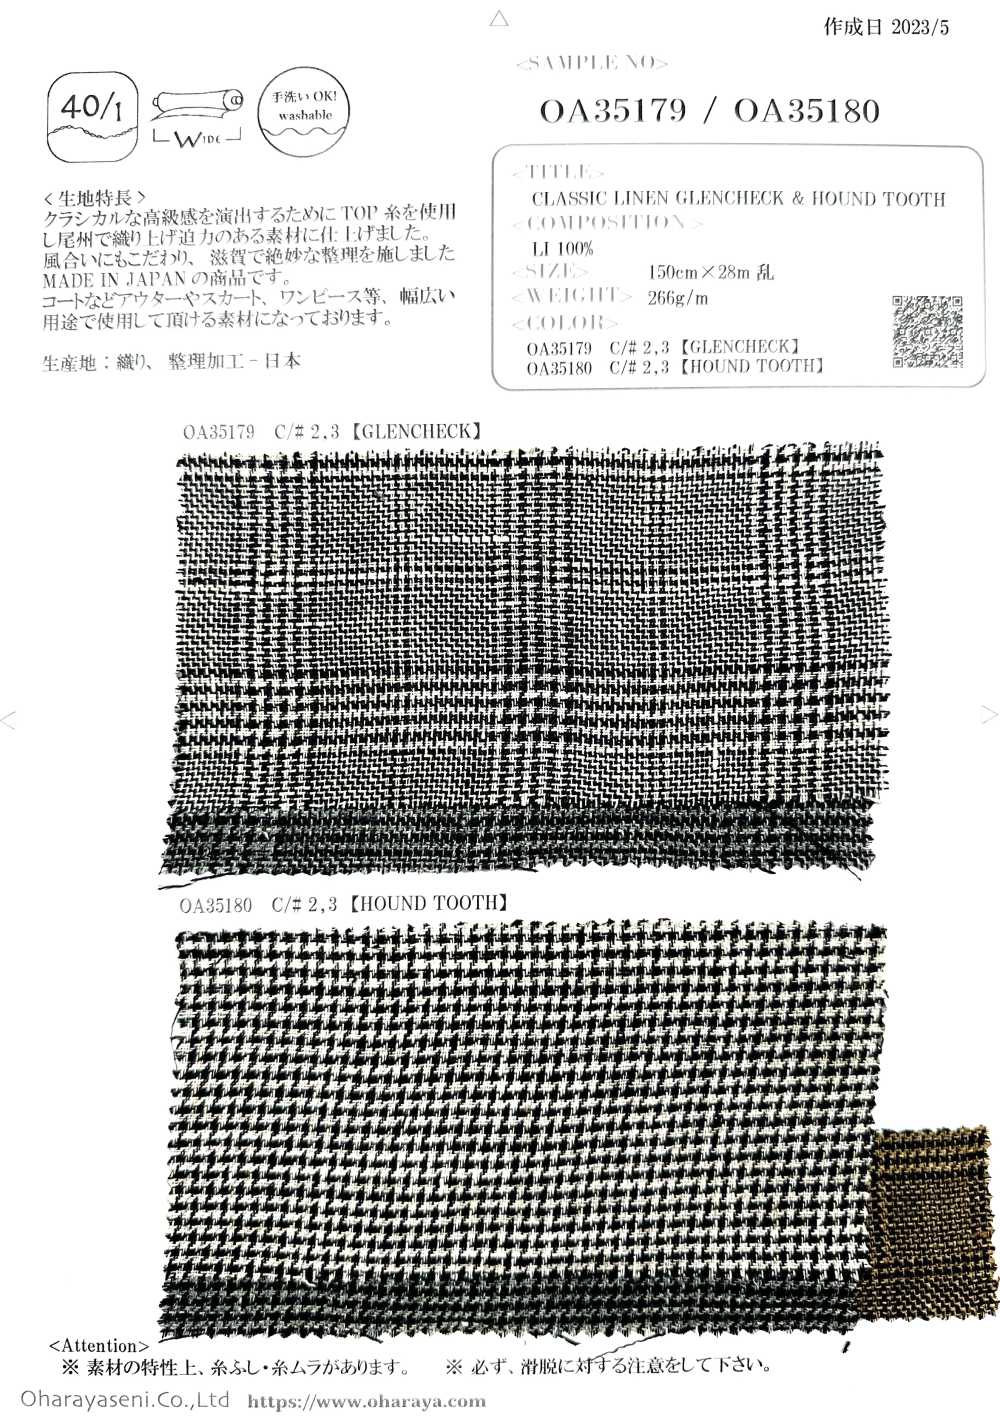 OA35180 LINHO CLÁSSICO GLENCHECK & HOUND TOOTH[Têxtil / Tecido] Oharayaseni